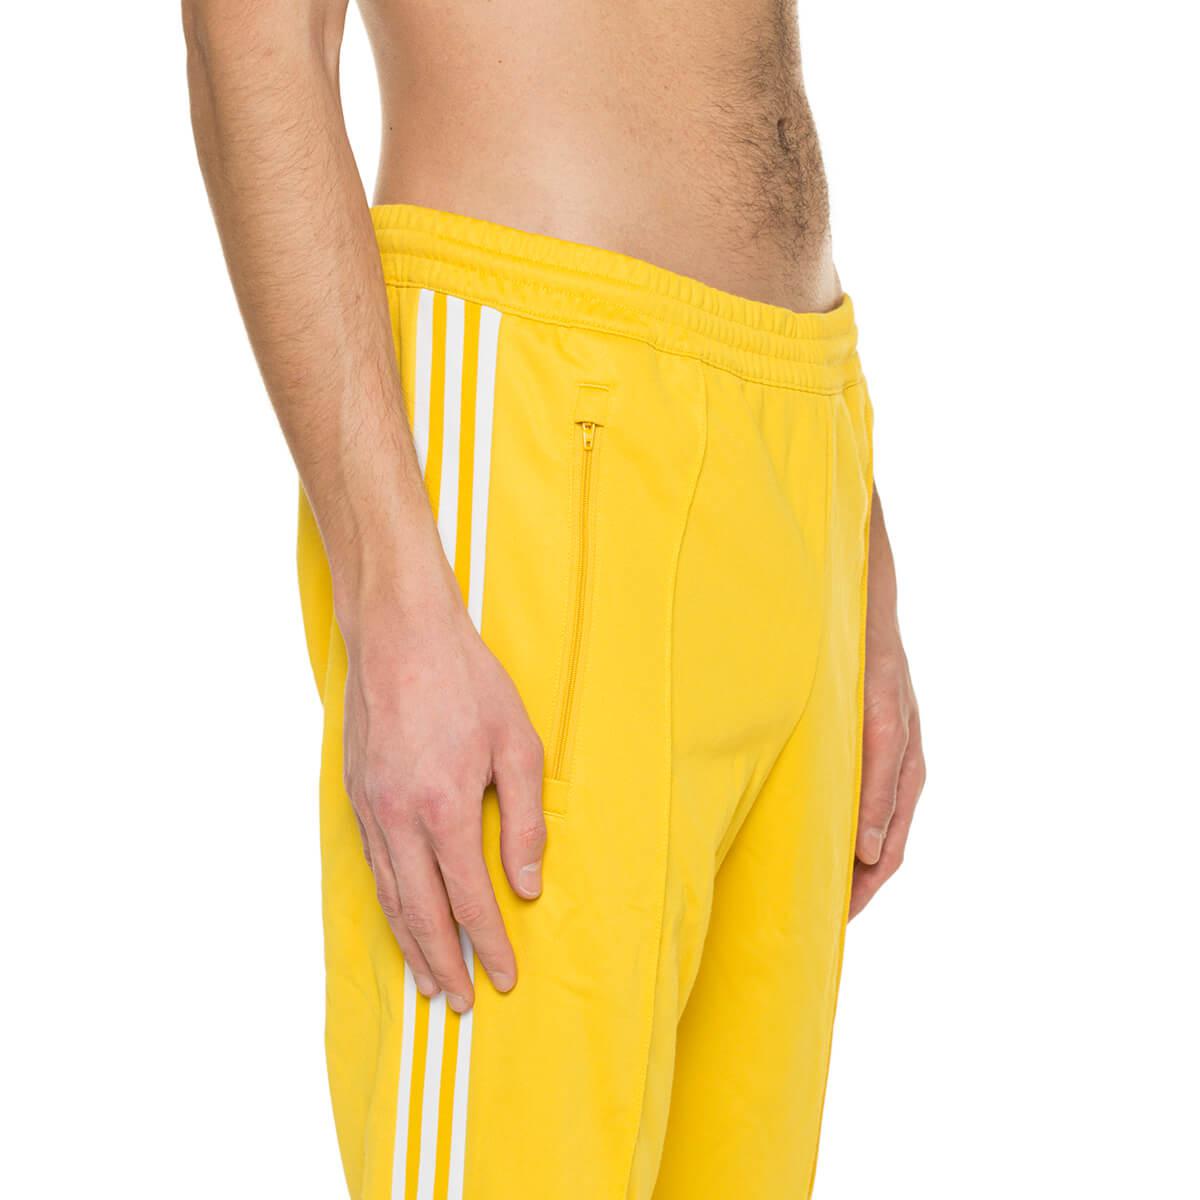 Lyst - Adidas Originals Beckenbauer Track Pants in Yellow for Men